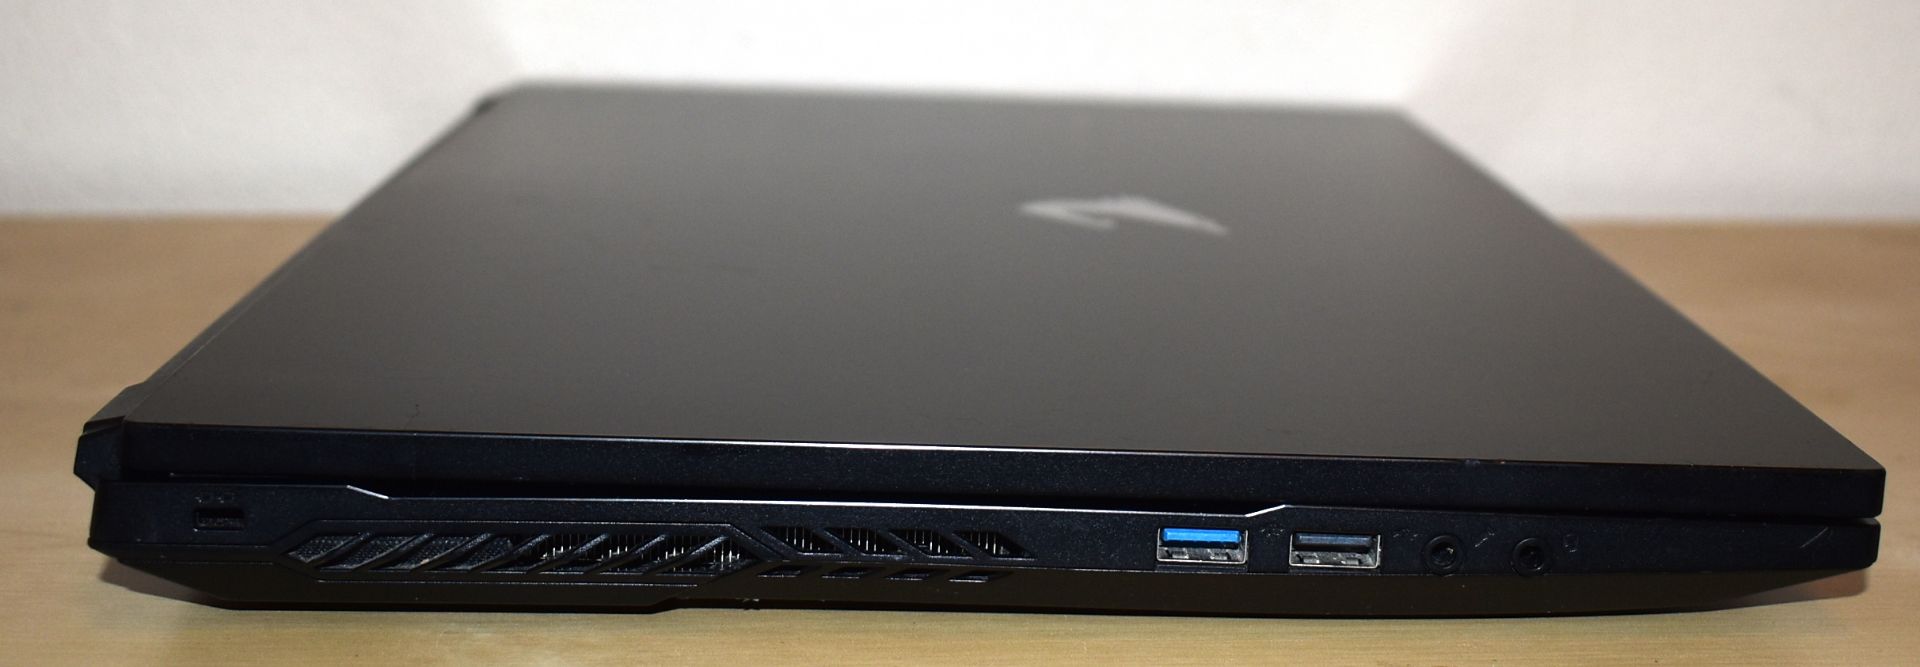 1 x Gigabyte Aorus 17.3 FHD Gaming Laptop - i7-10750H CPU, 16gb RAM, 500gb SSD. RTX2060 6gb Graphics - Image 17 of 37